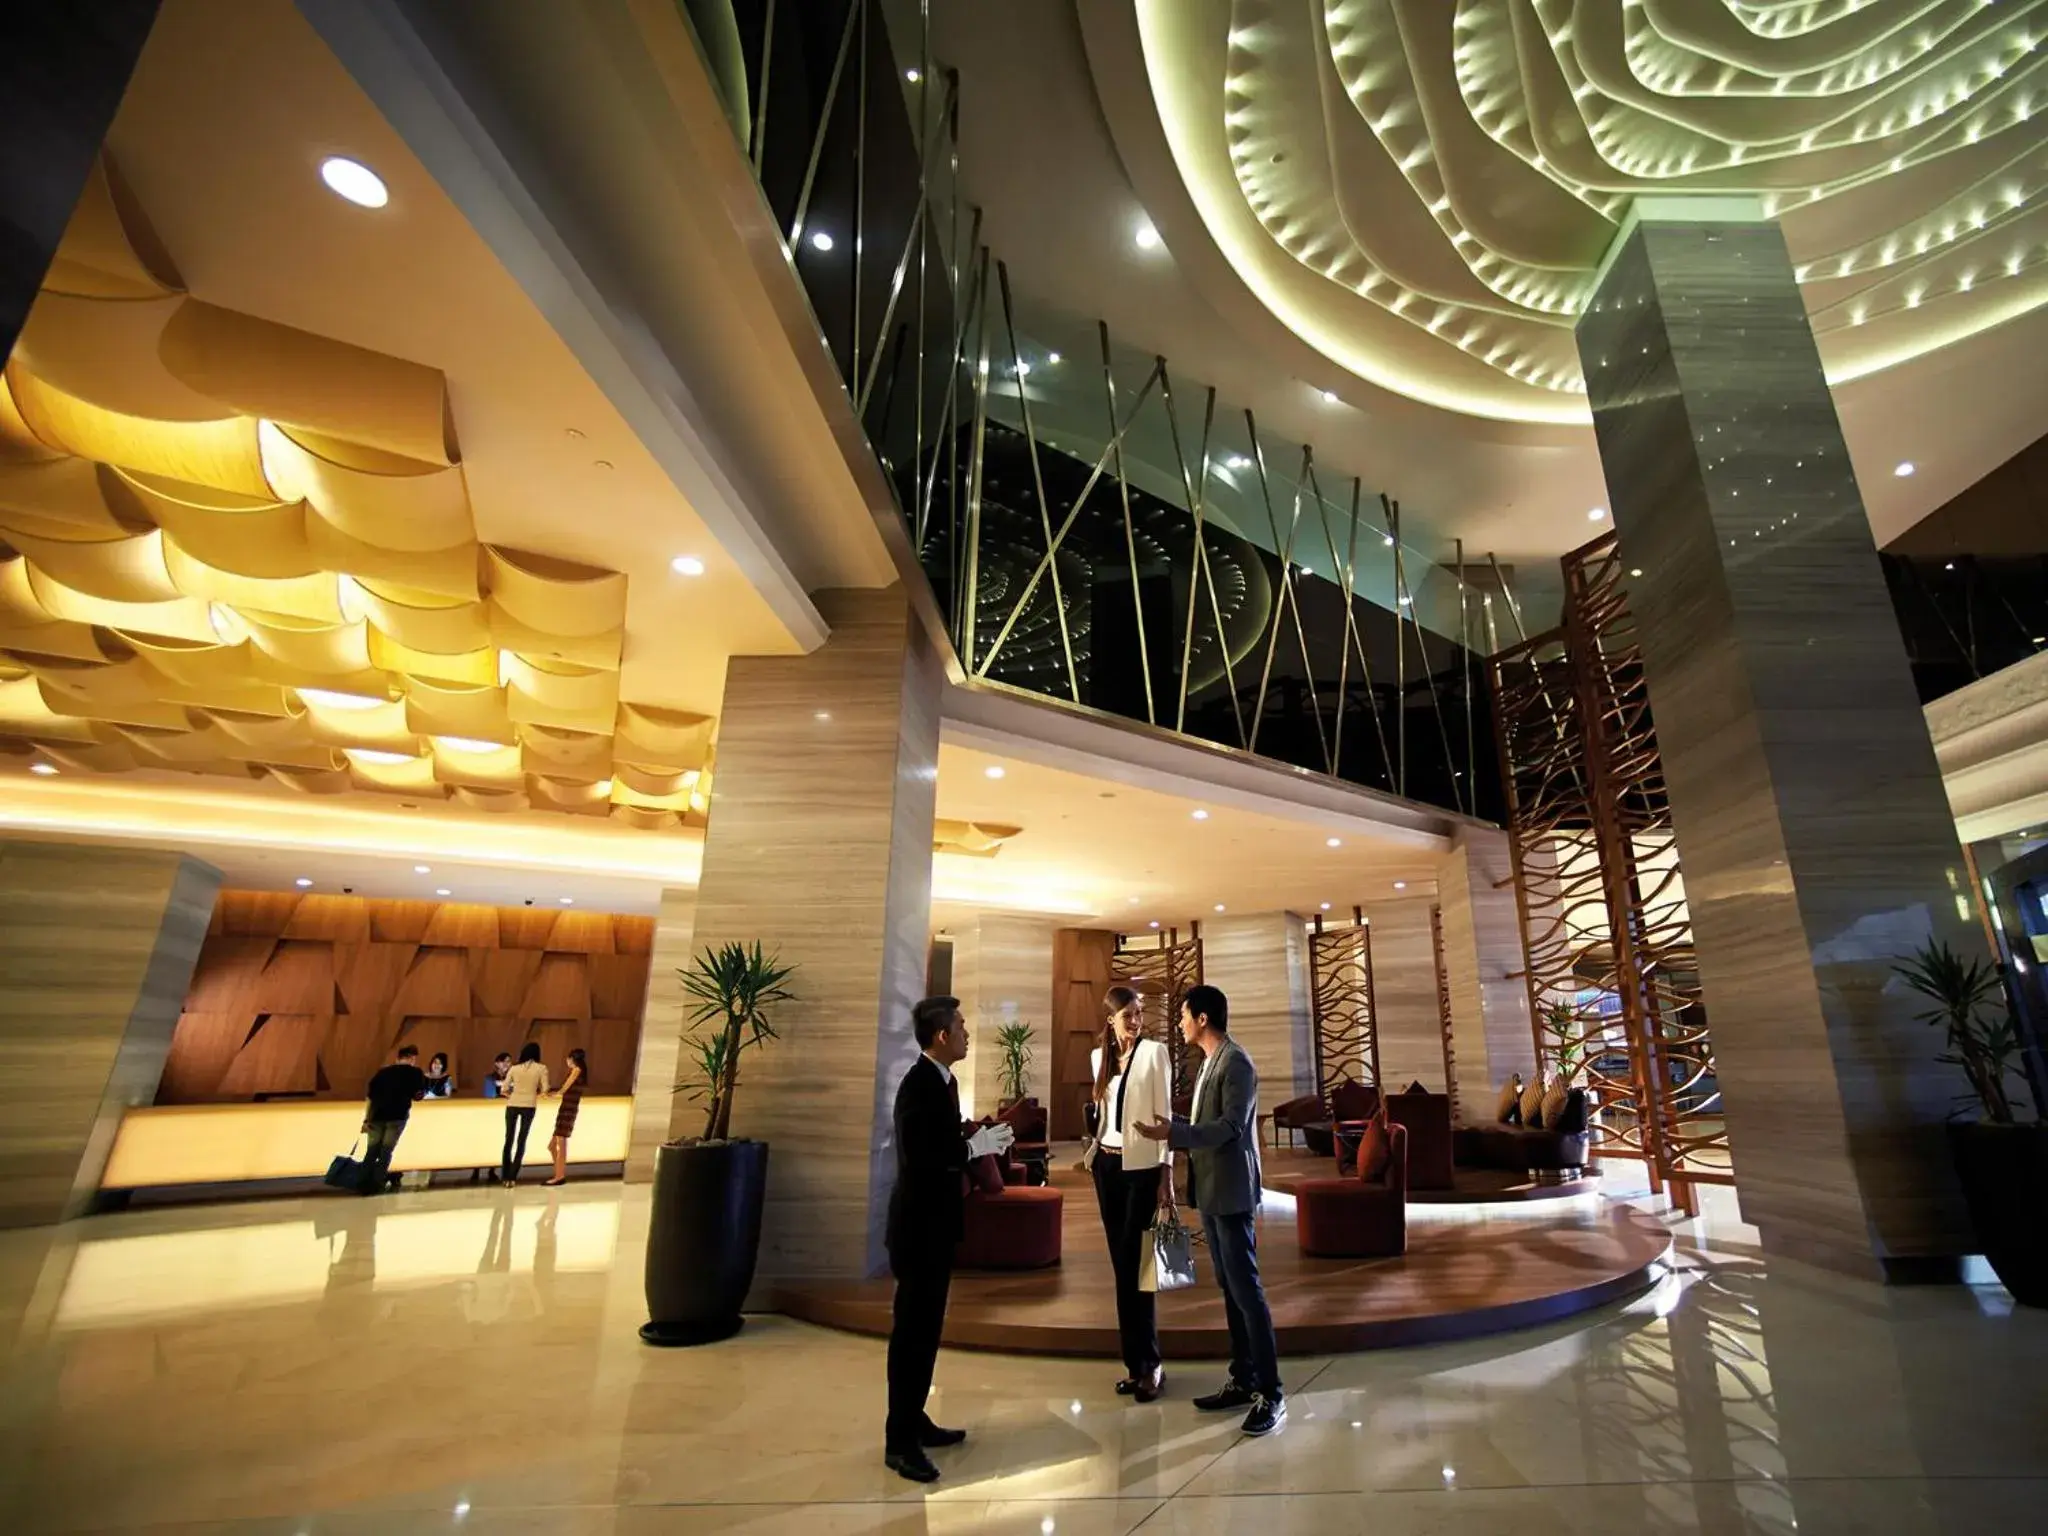 Staff in Resorts World Genting - Genting Grand